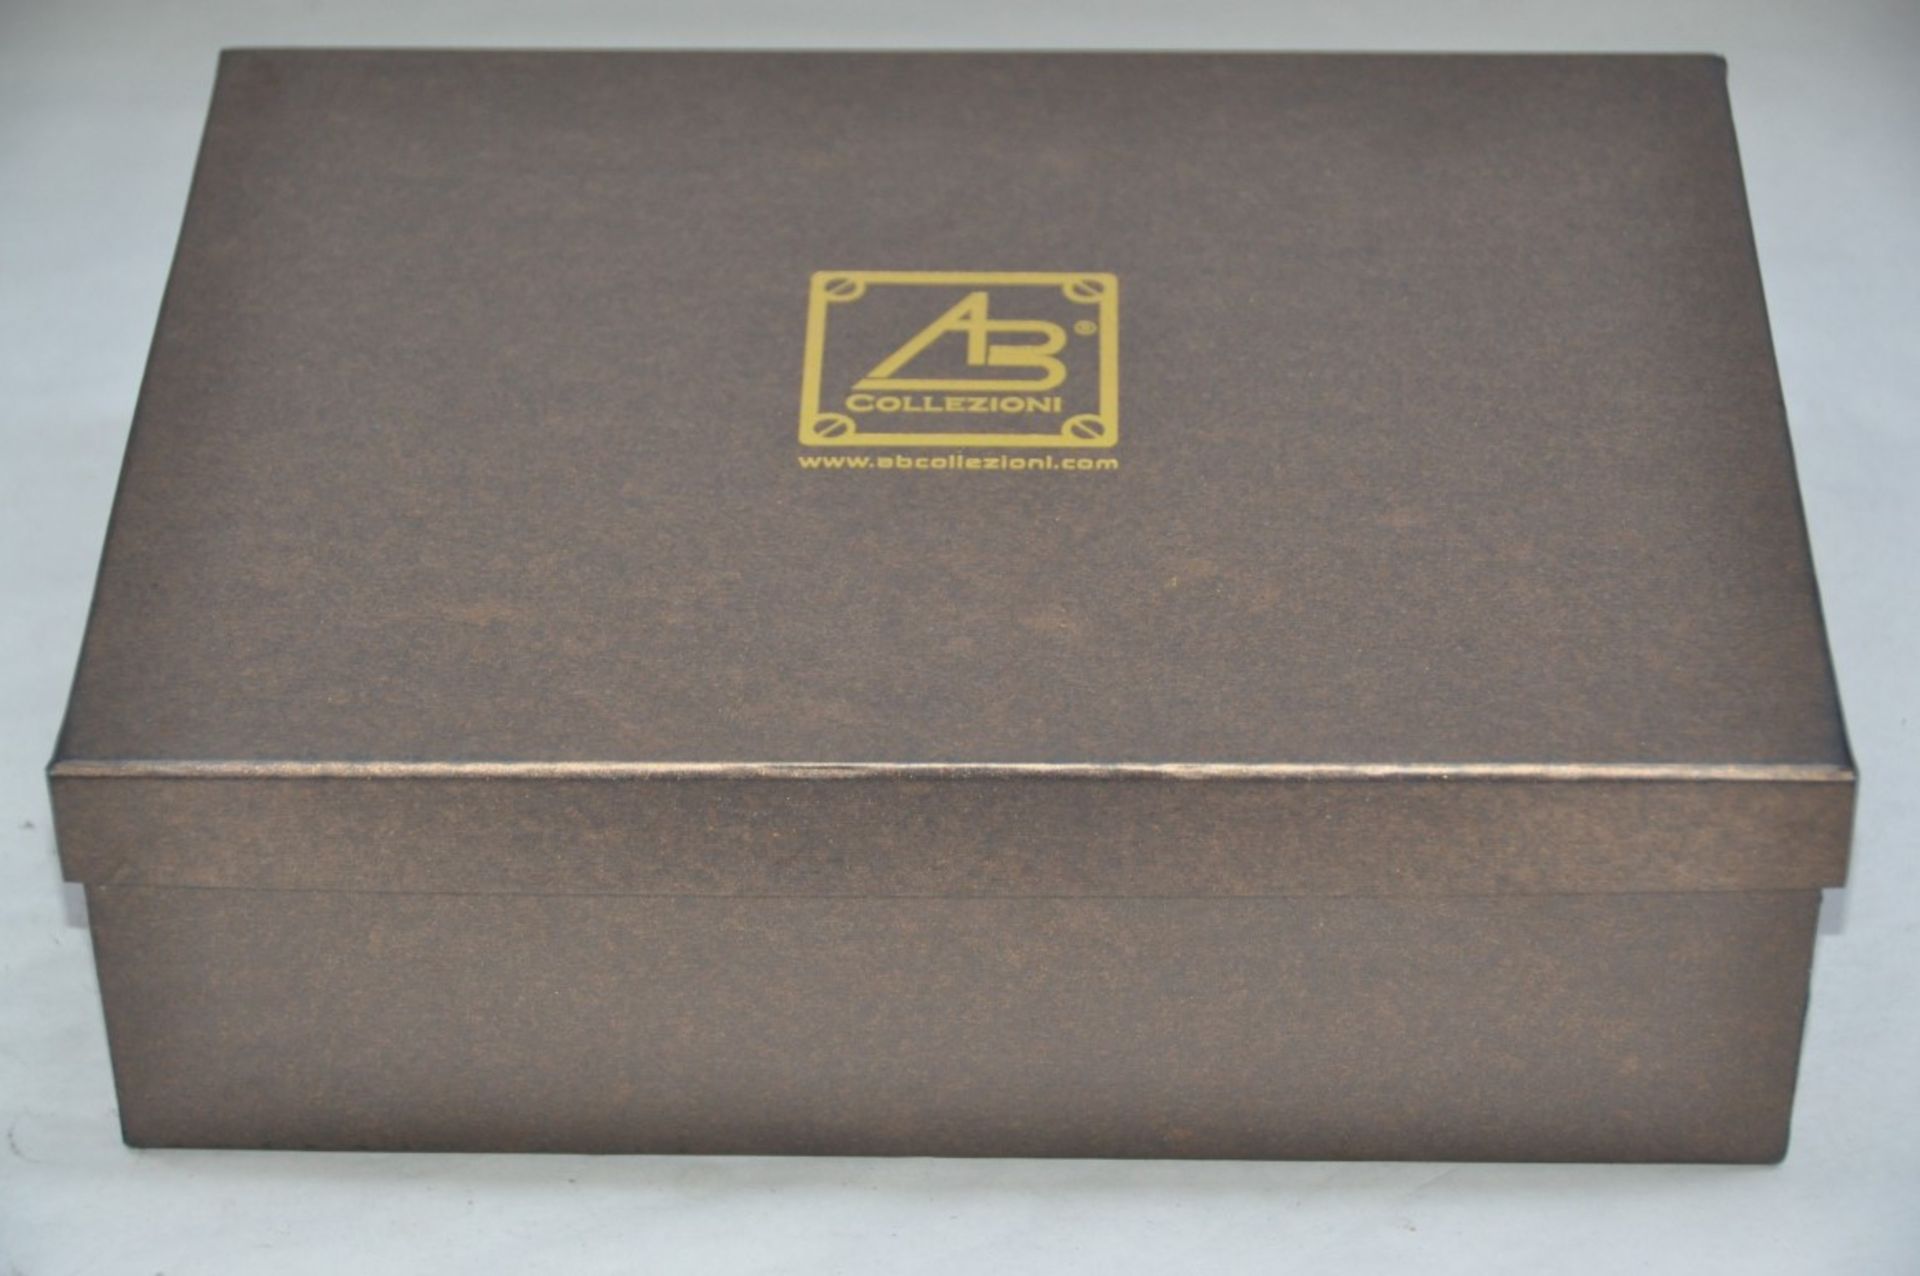 1 x "AB Collezioni" Italian Genuine Leather-Bound Luxury POKER SET (34047) - Ref LT006A  - - Image 5 of 9